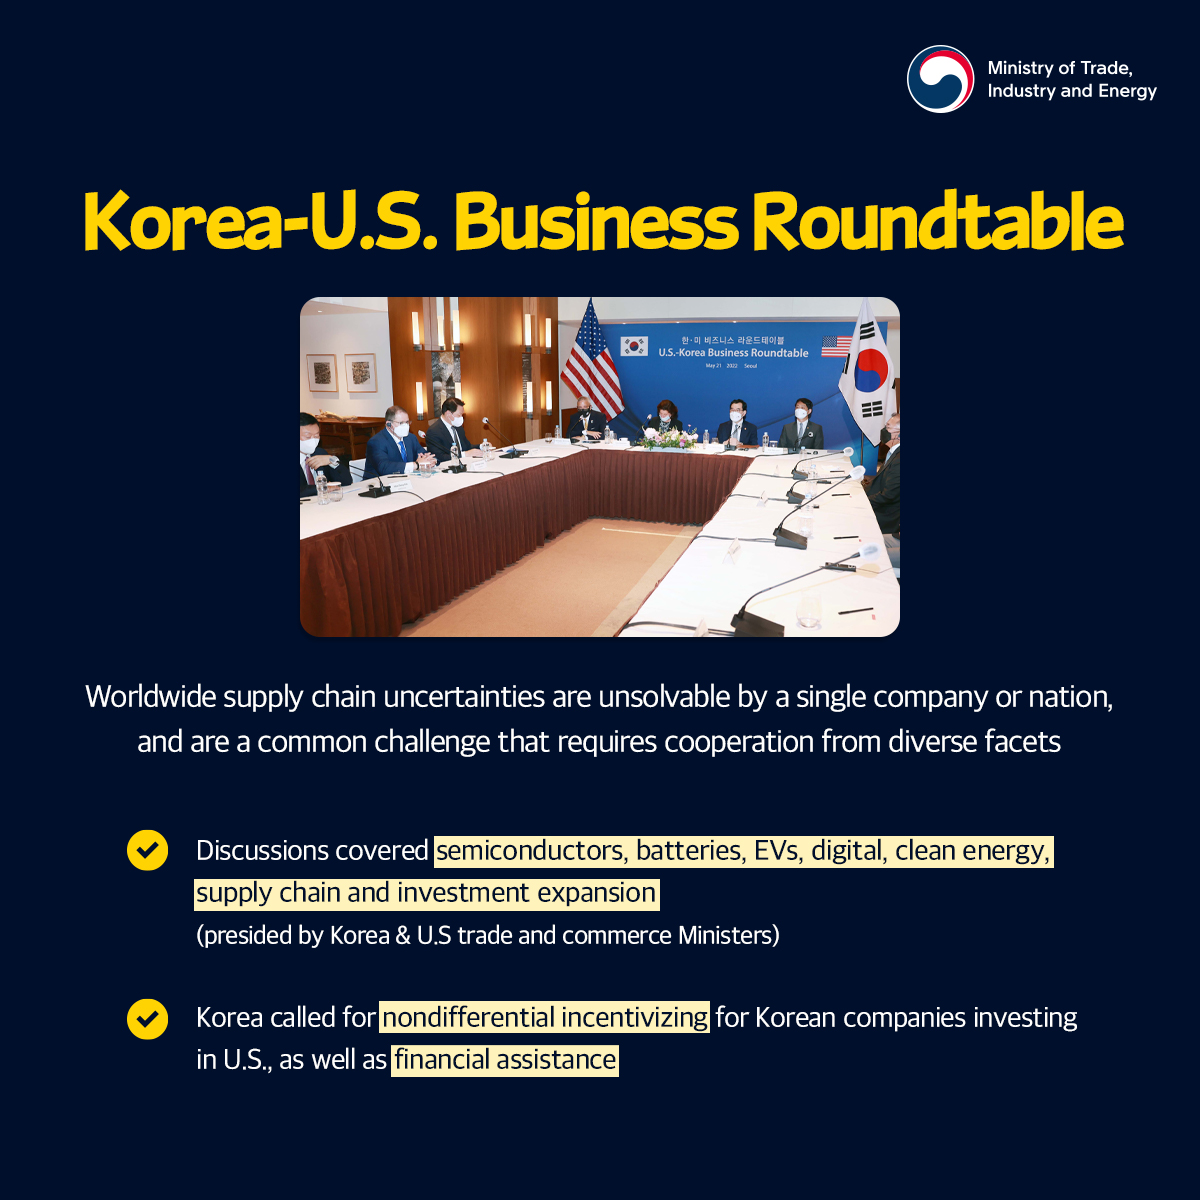 Korea-U.S. Summit: Economic Outcomes & Impact Image 2